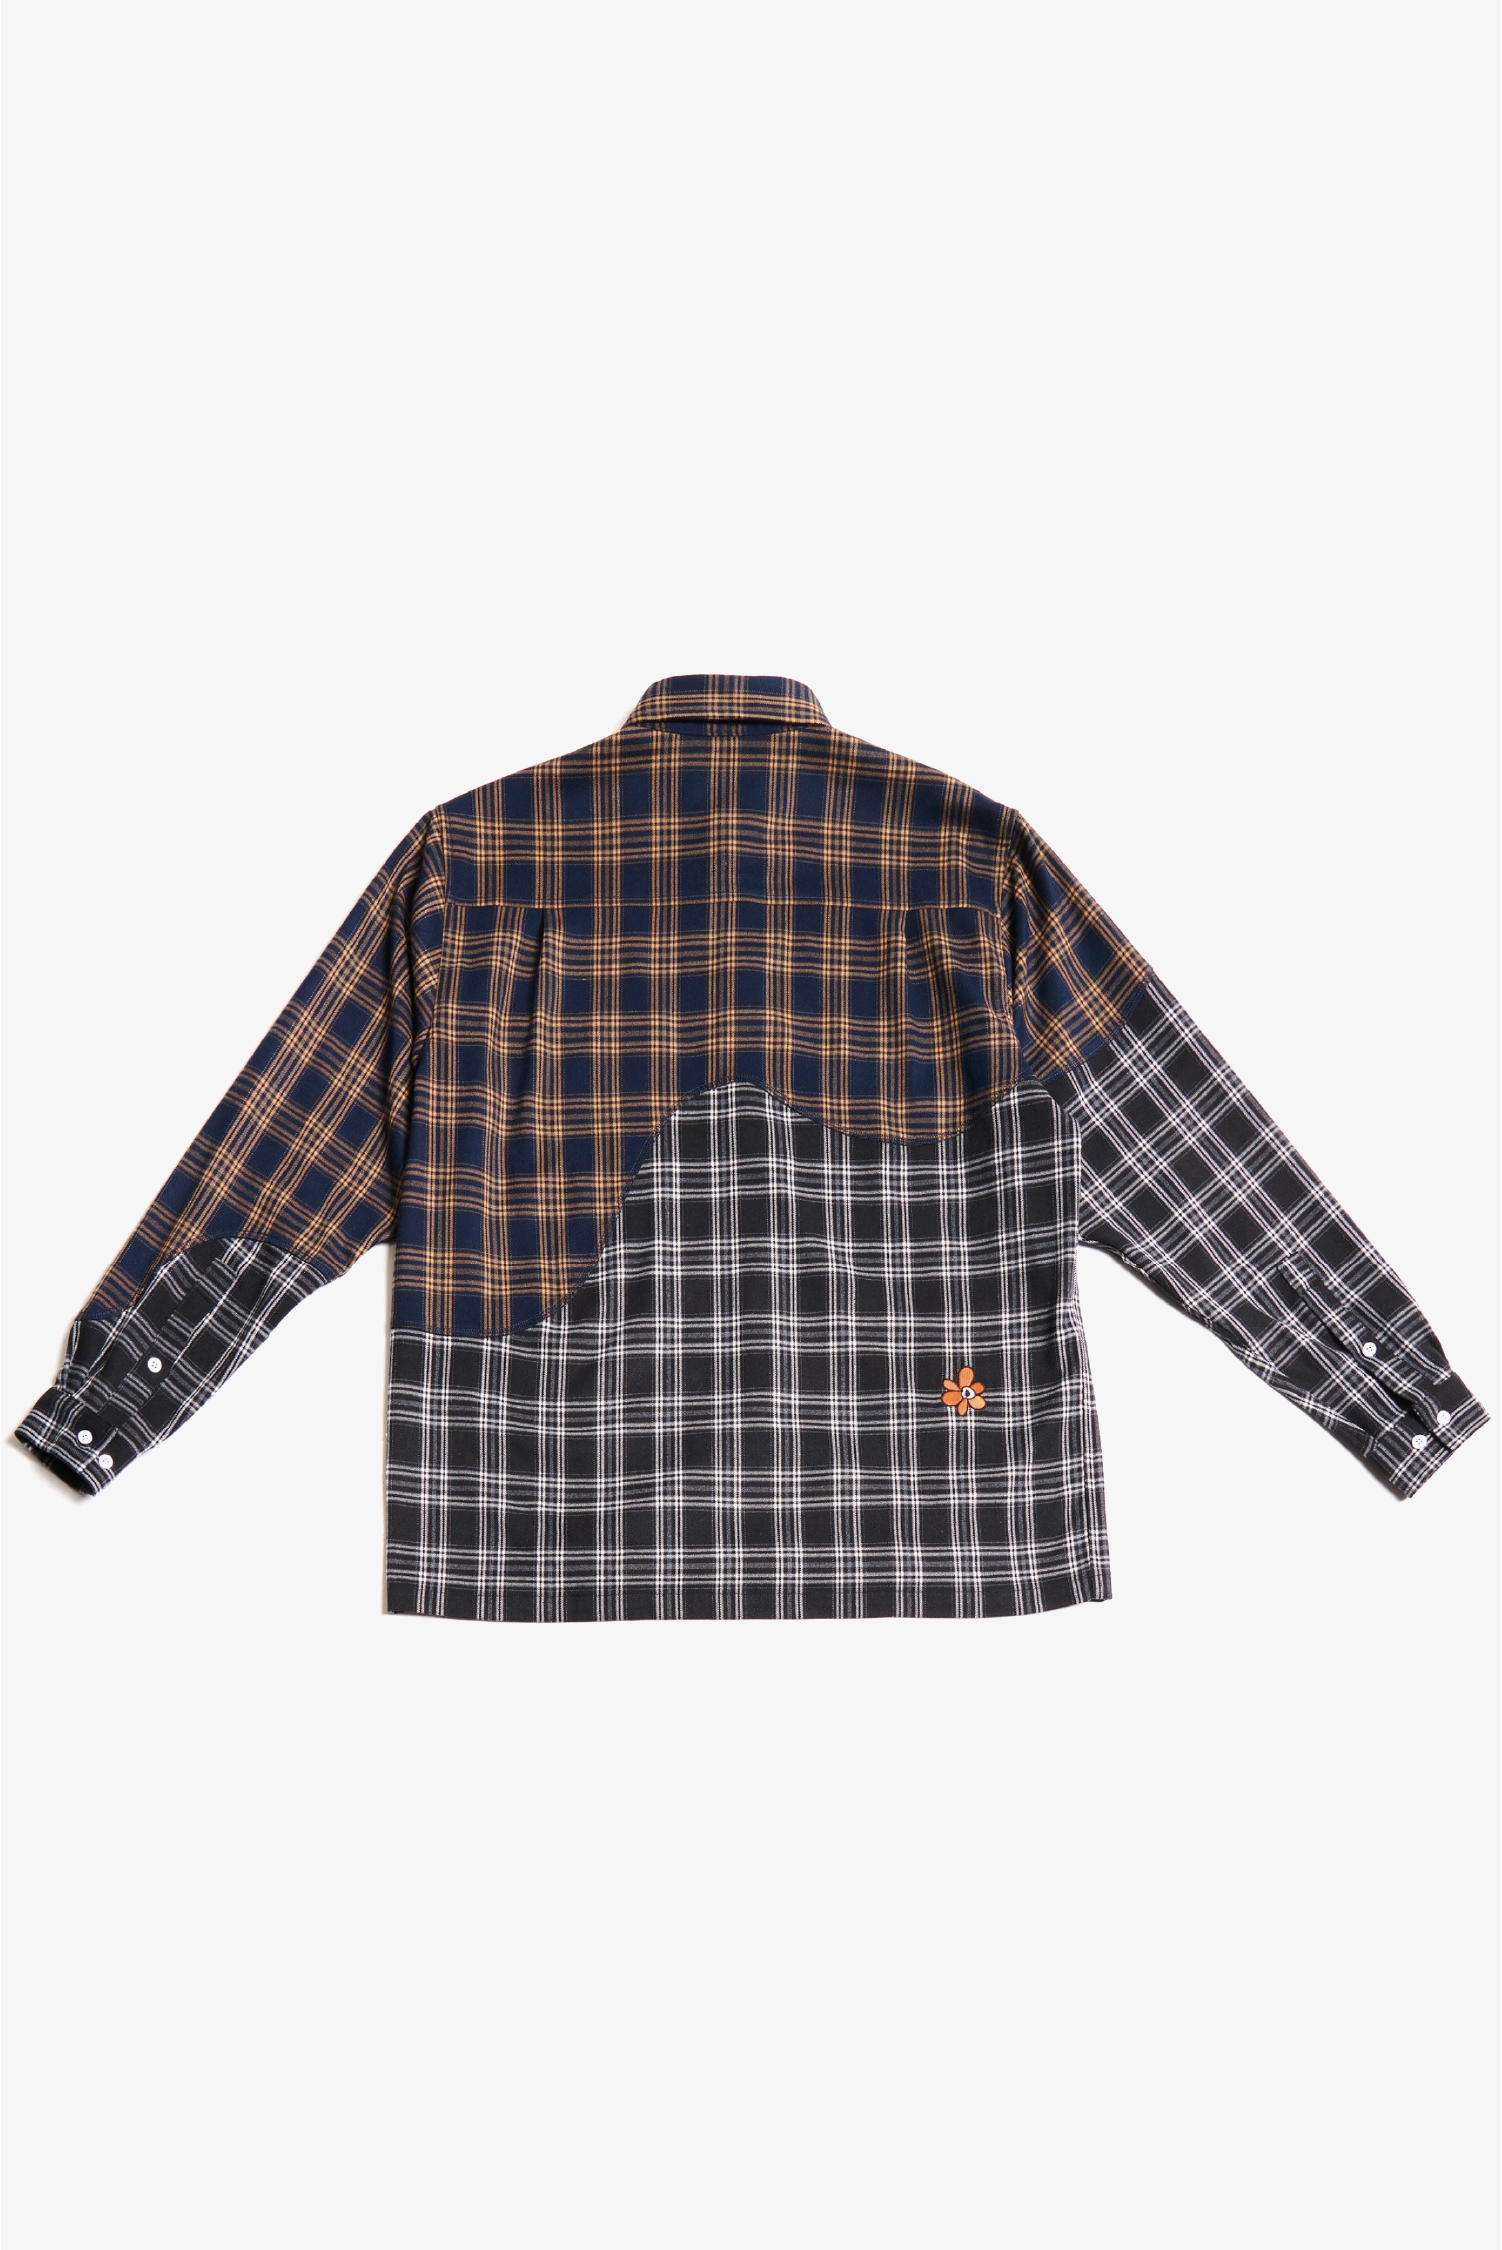 Selectshop FRAME - P.A.M. Old Timber Check Shirt Shirts Dubai